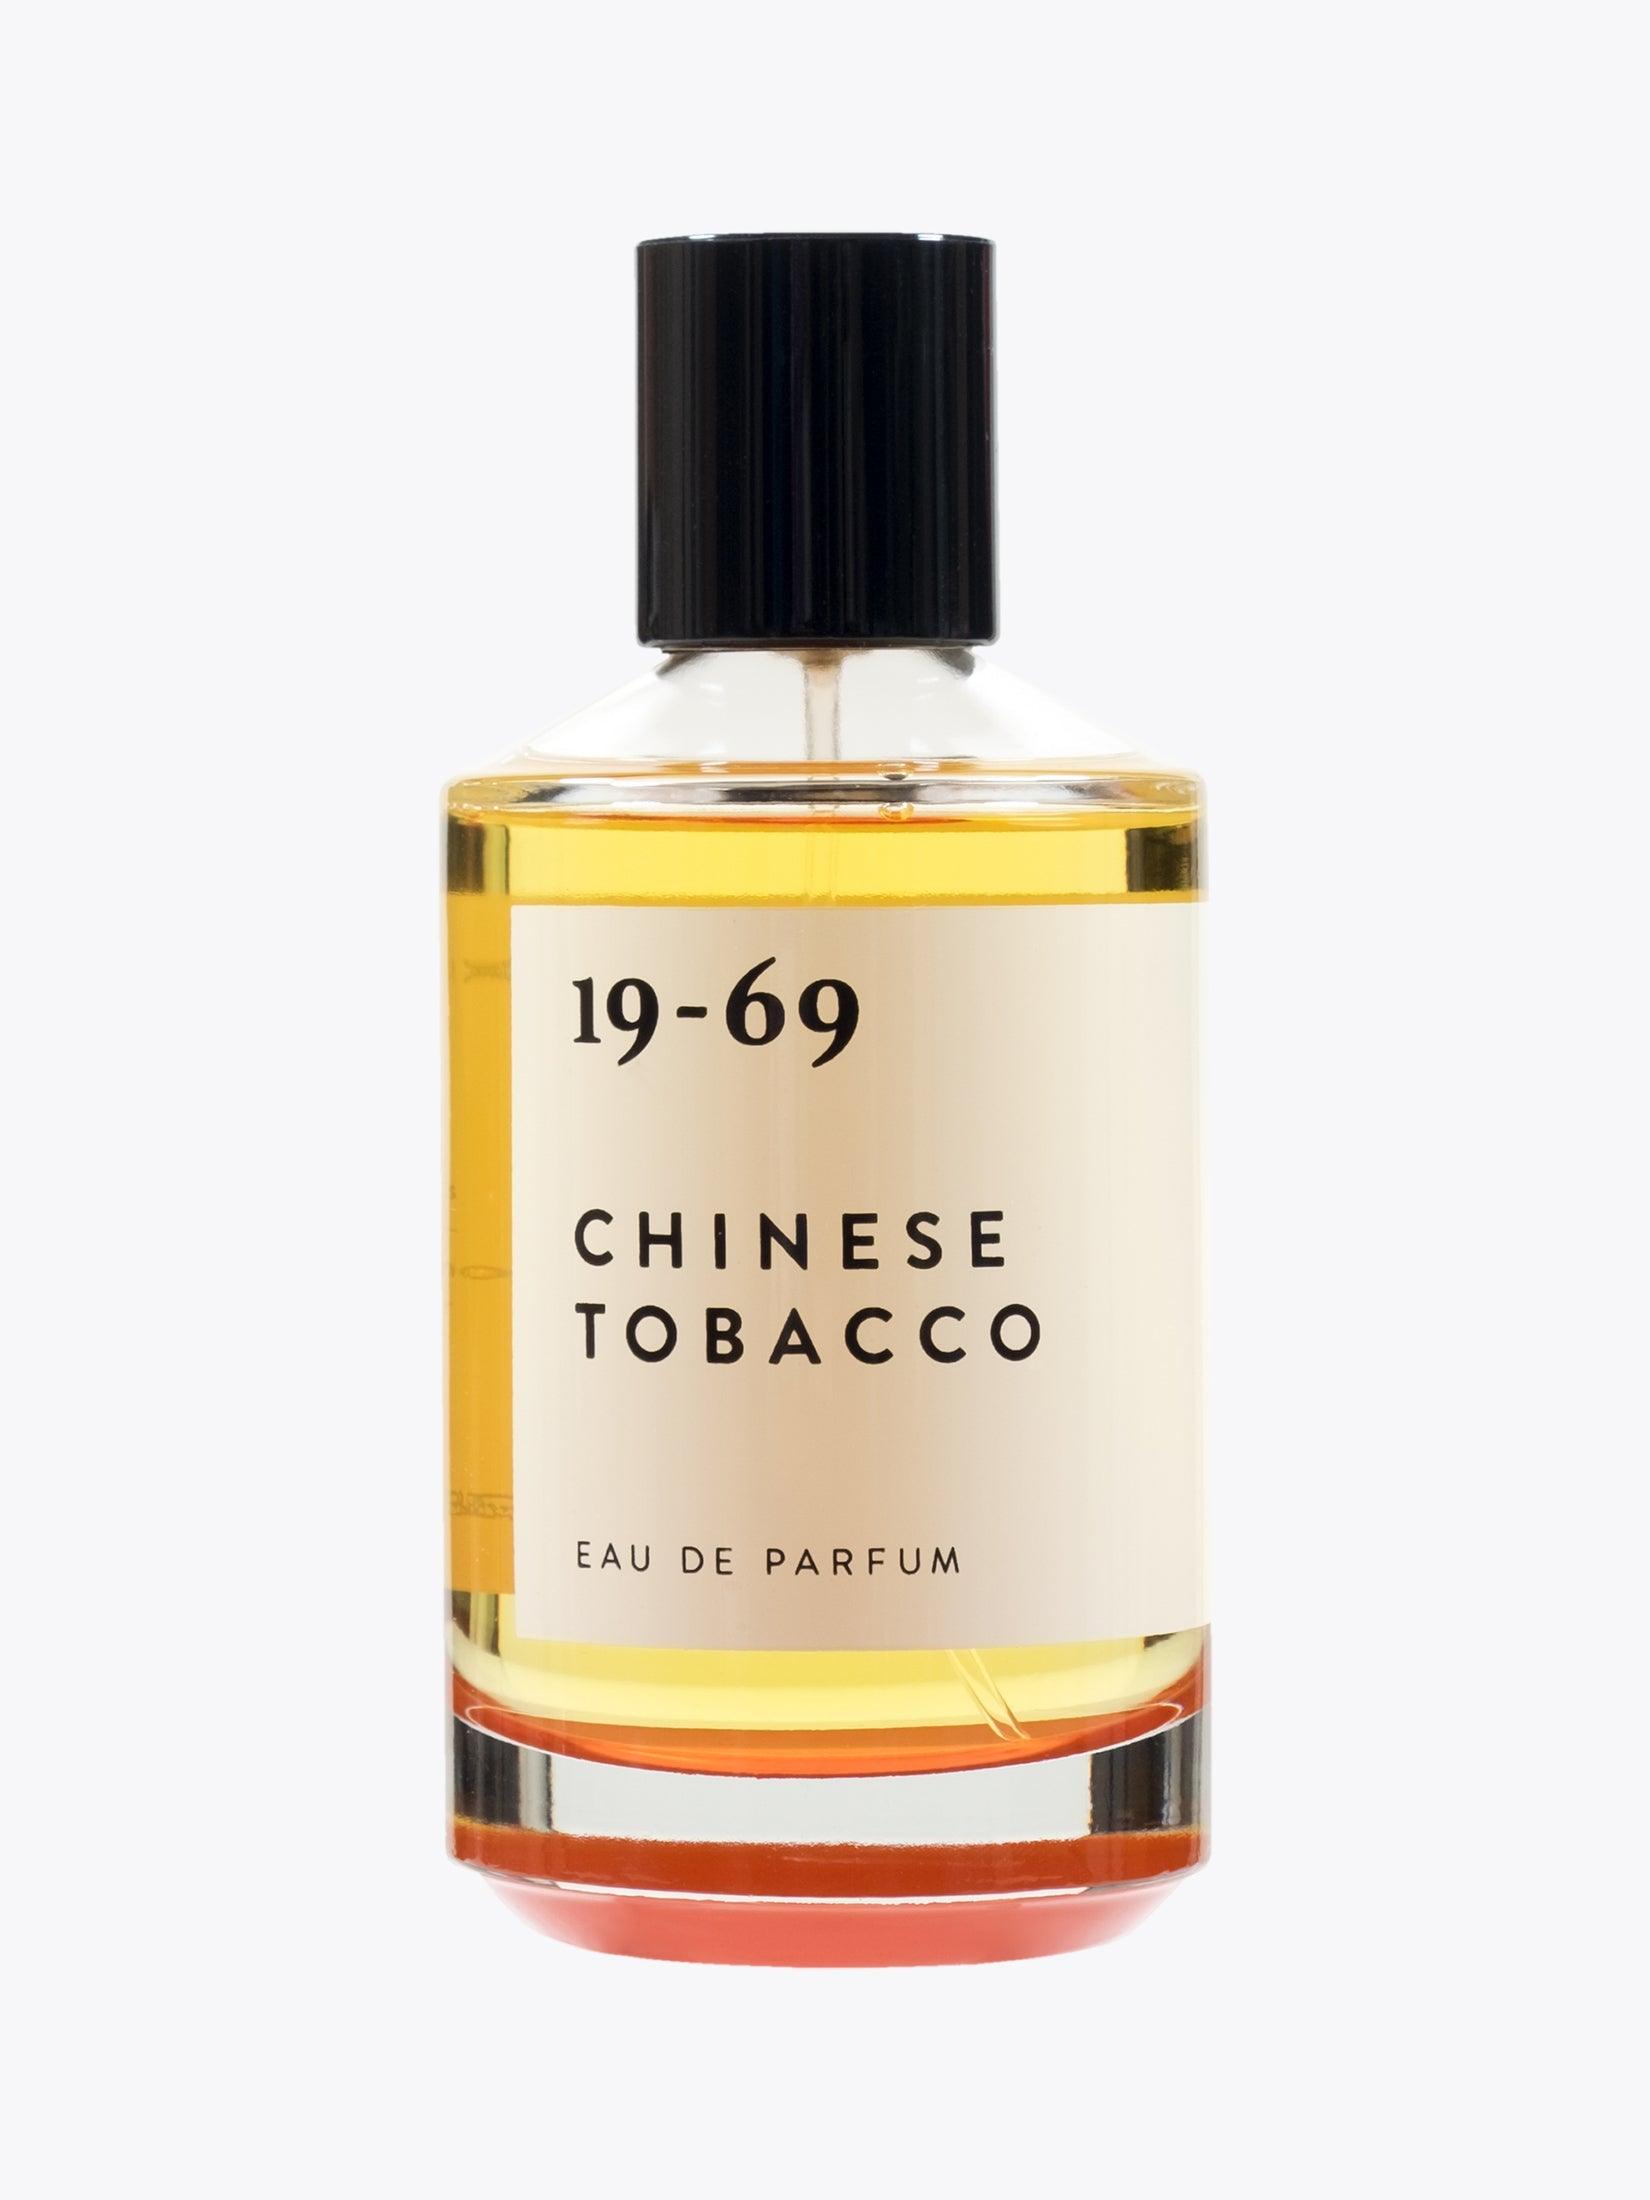 19-69 Chinese Tobacco Eau de Parfum 100ml